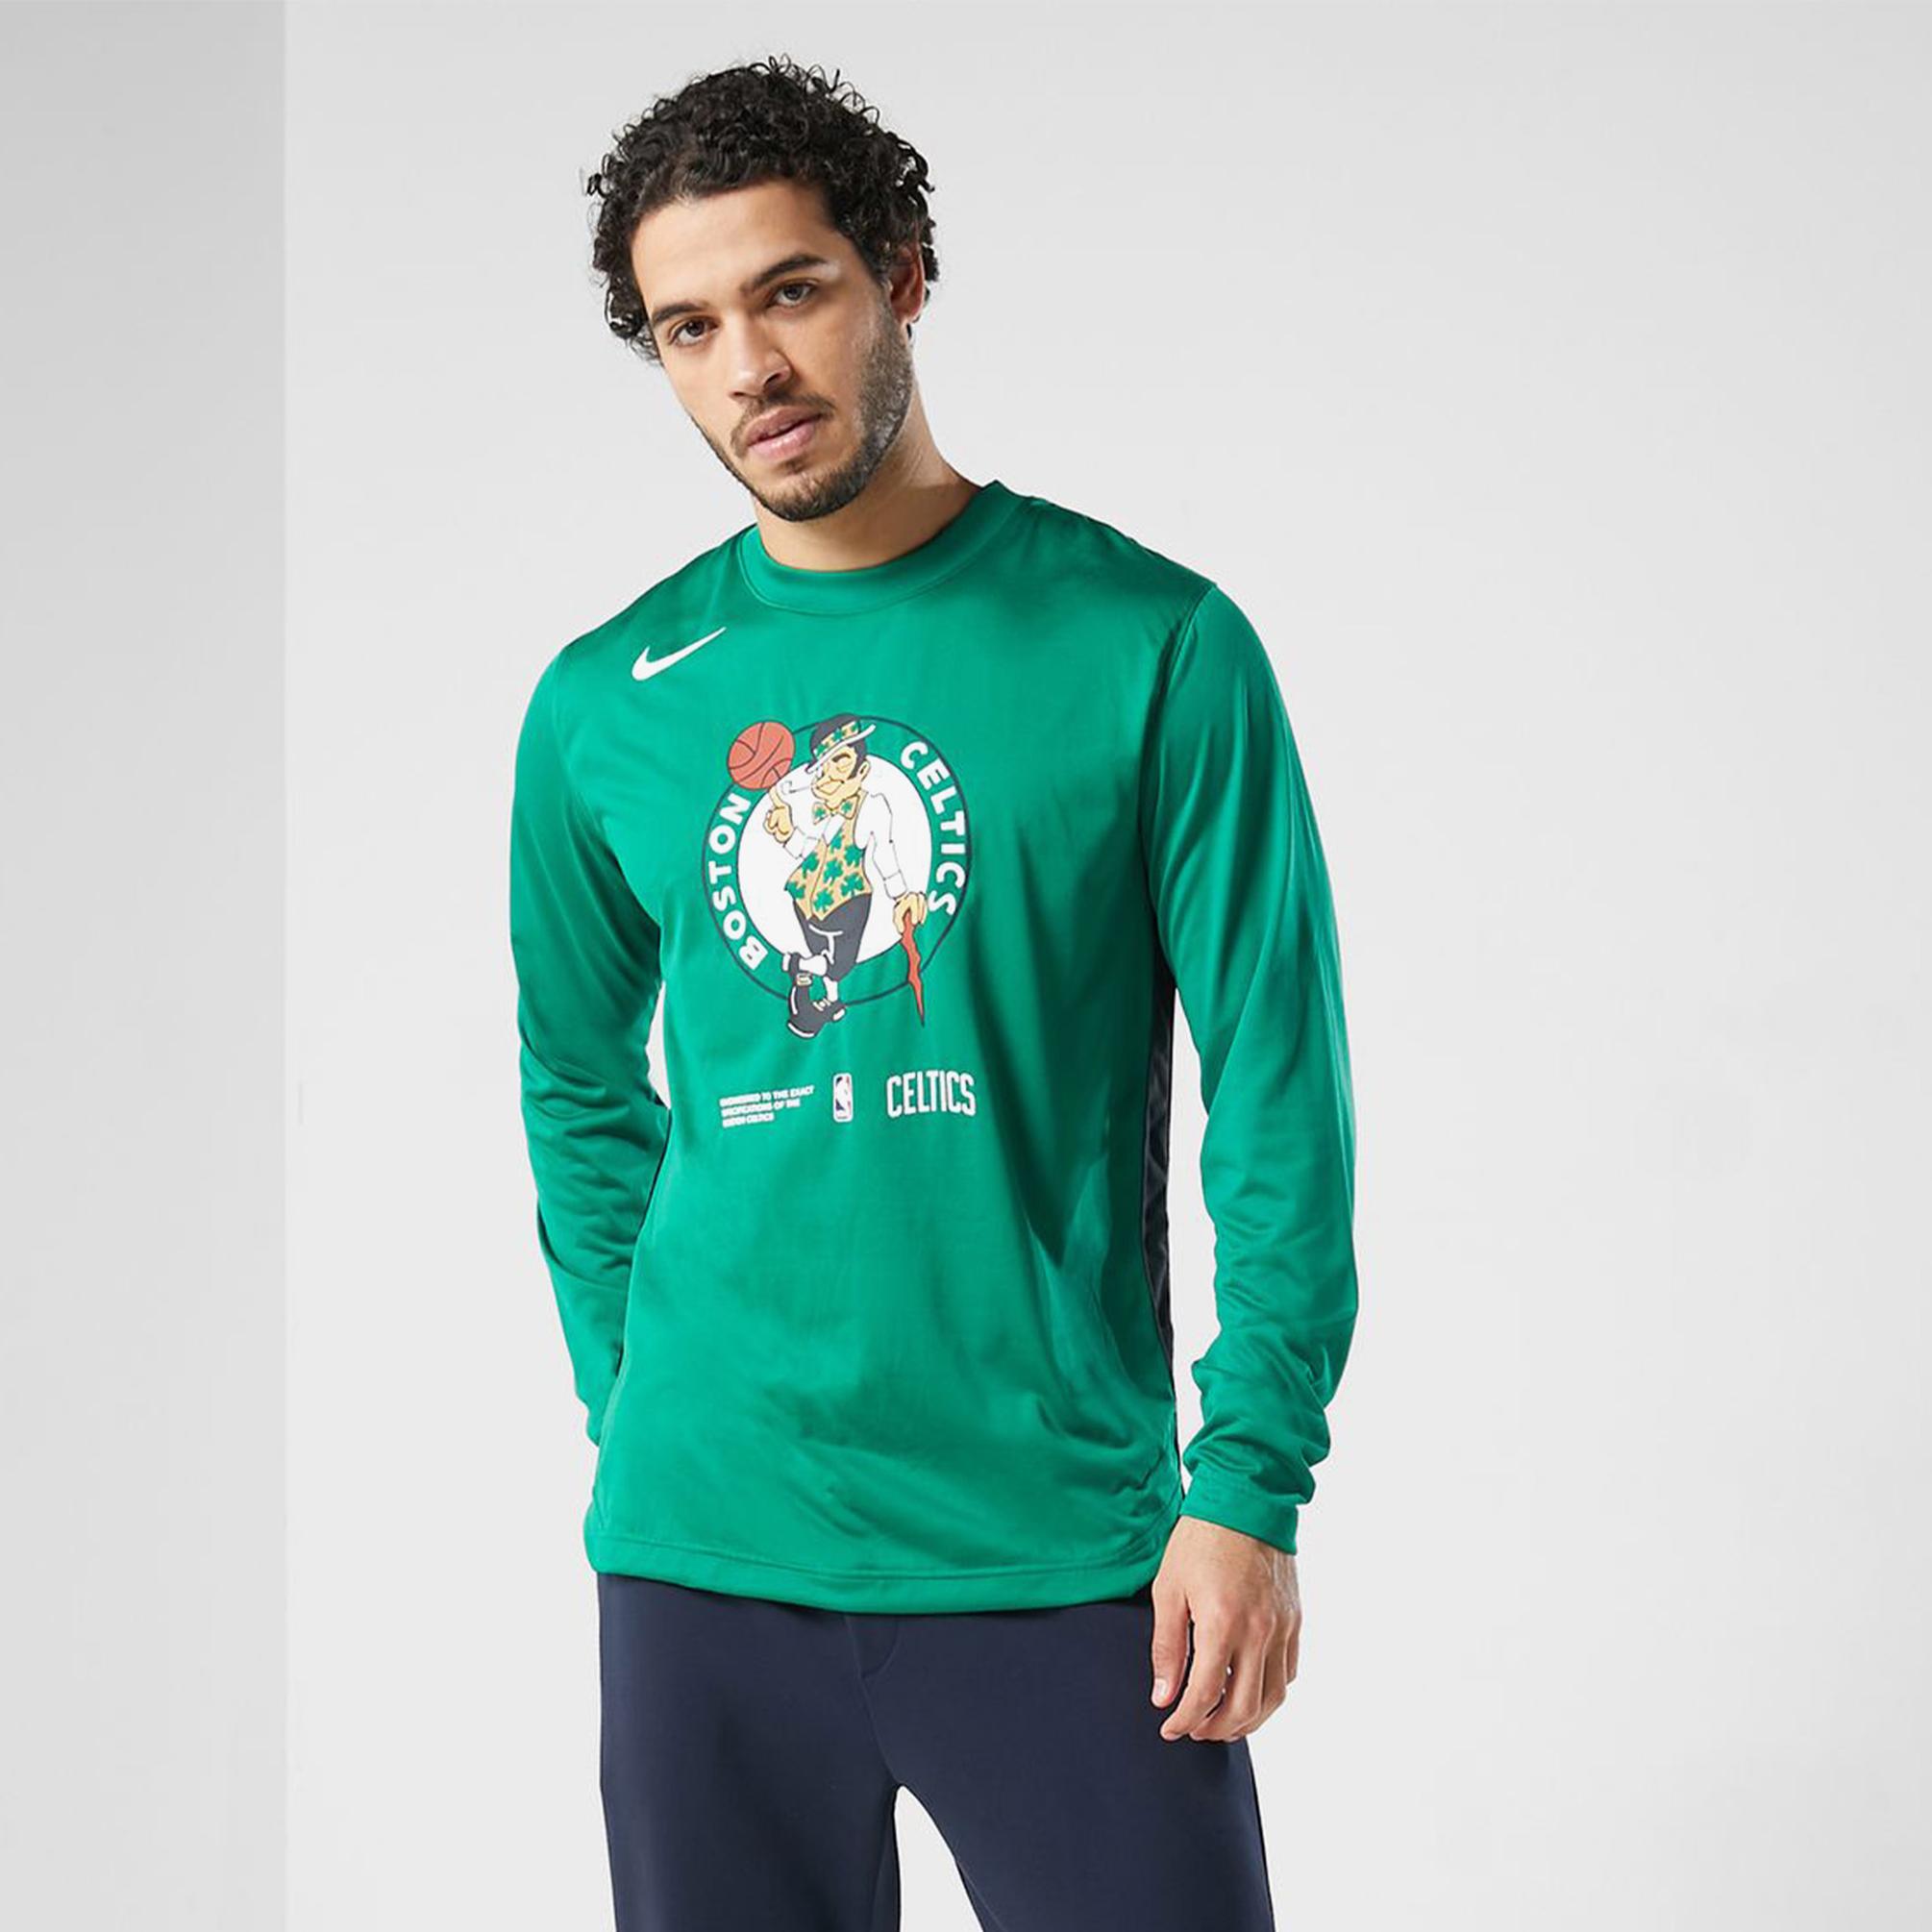  Nike Boston Celtics NBA Erkek Yeşil Sweatshirt